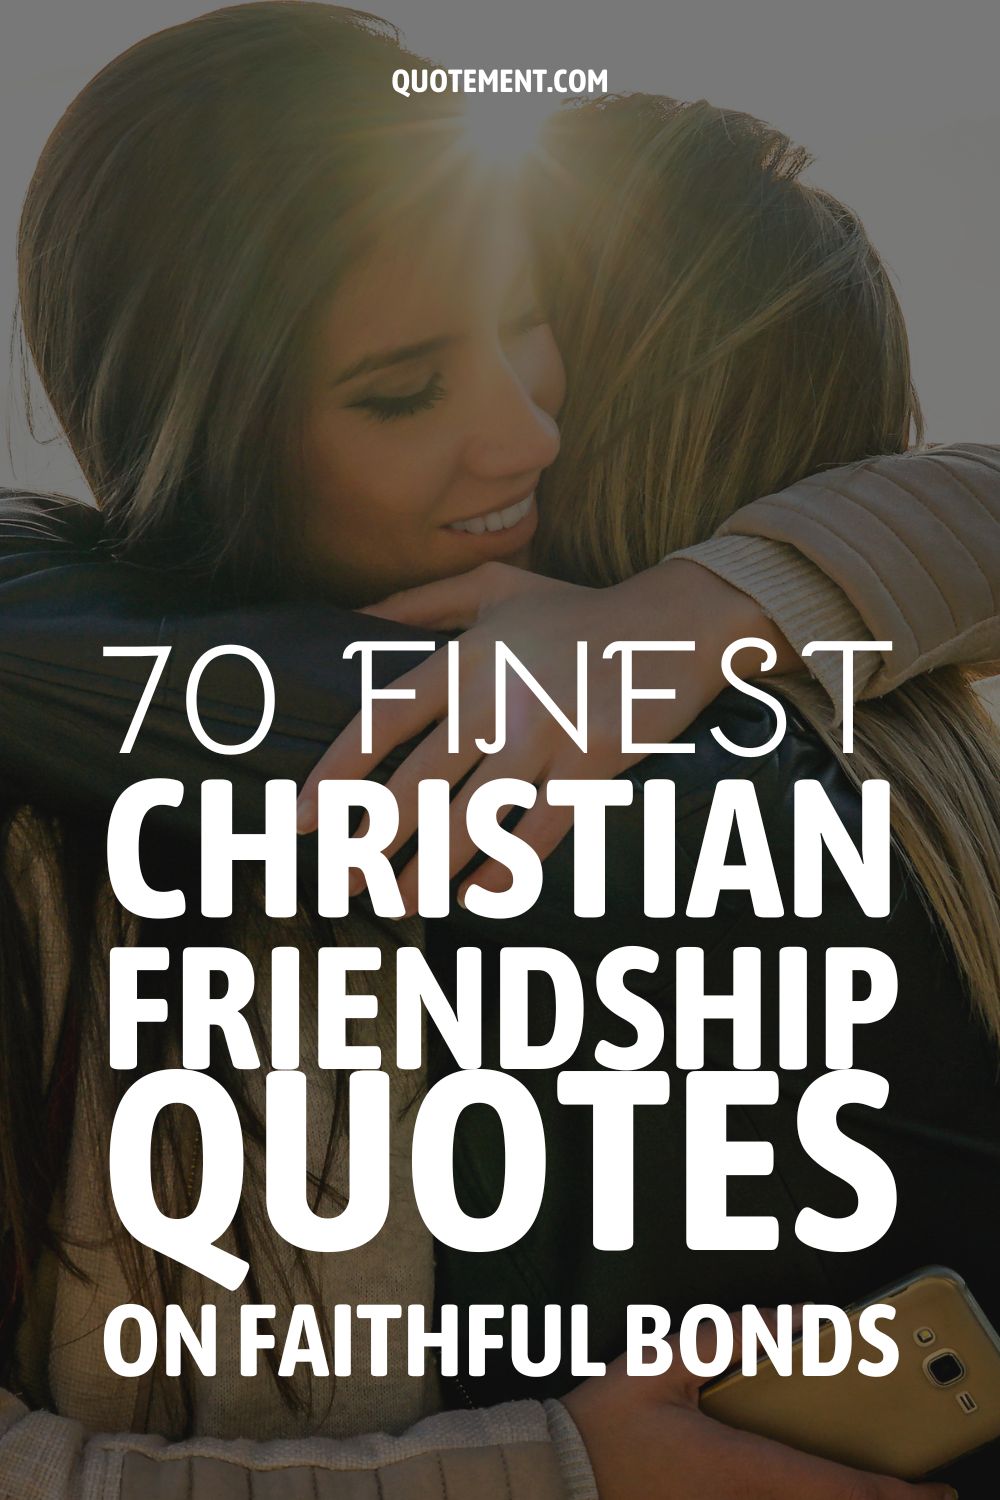 70 Finest Christian Friendship Quotes On Faithful Bonds